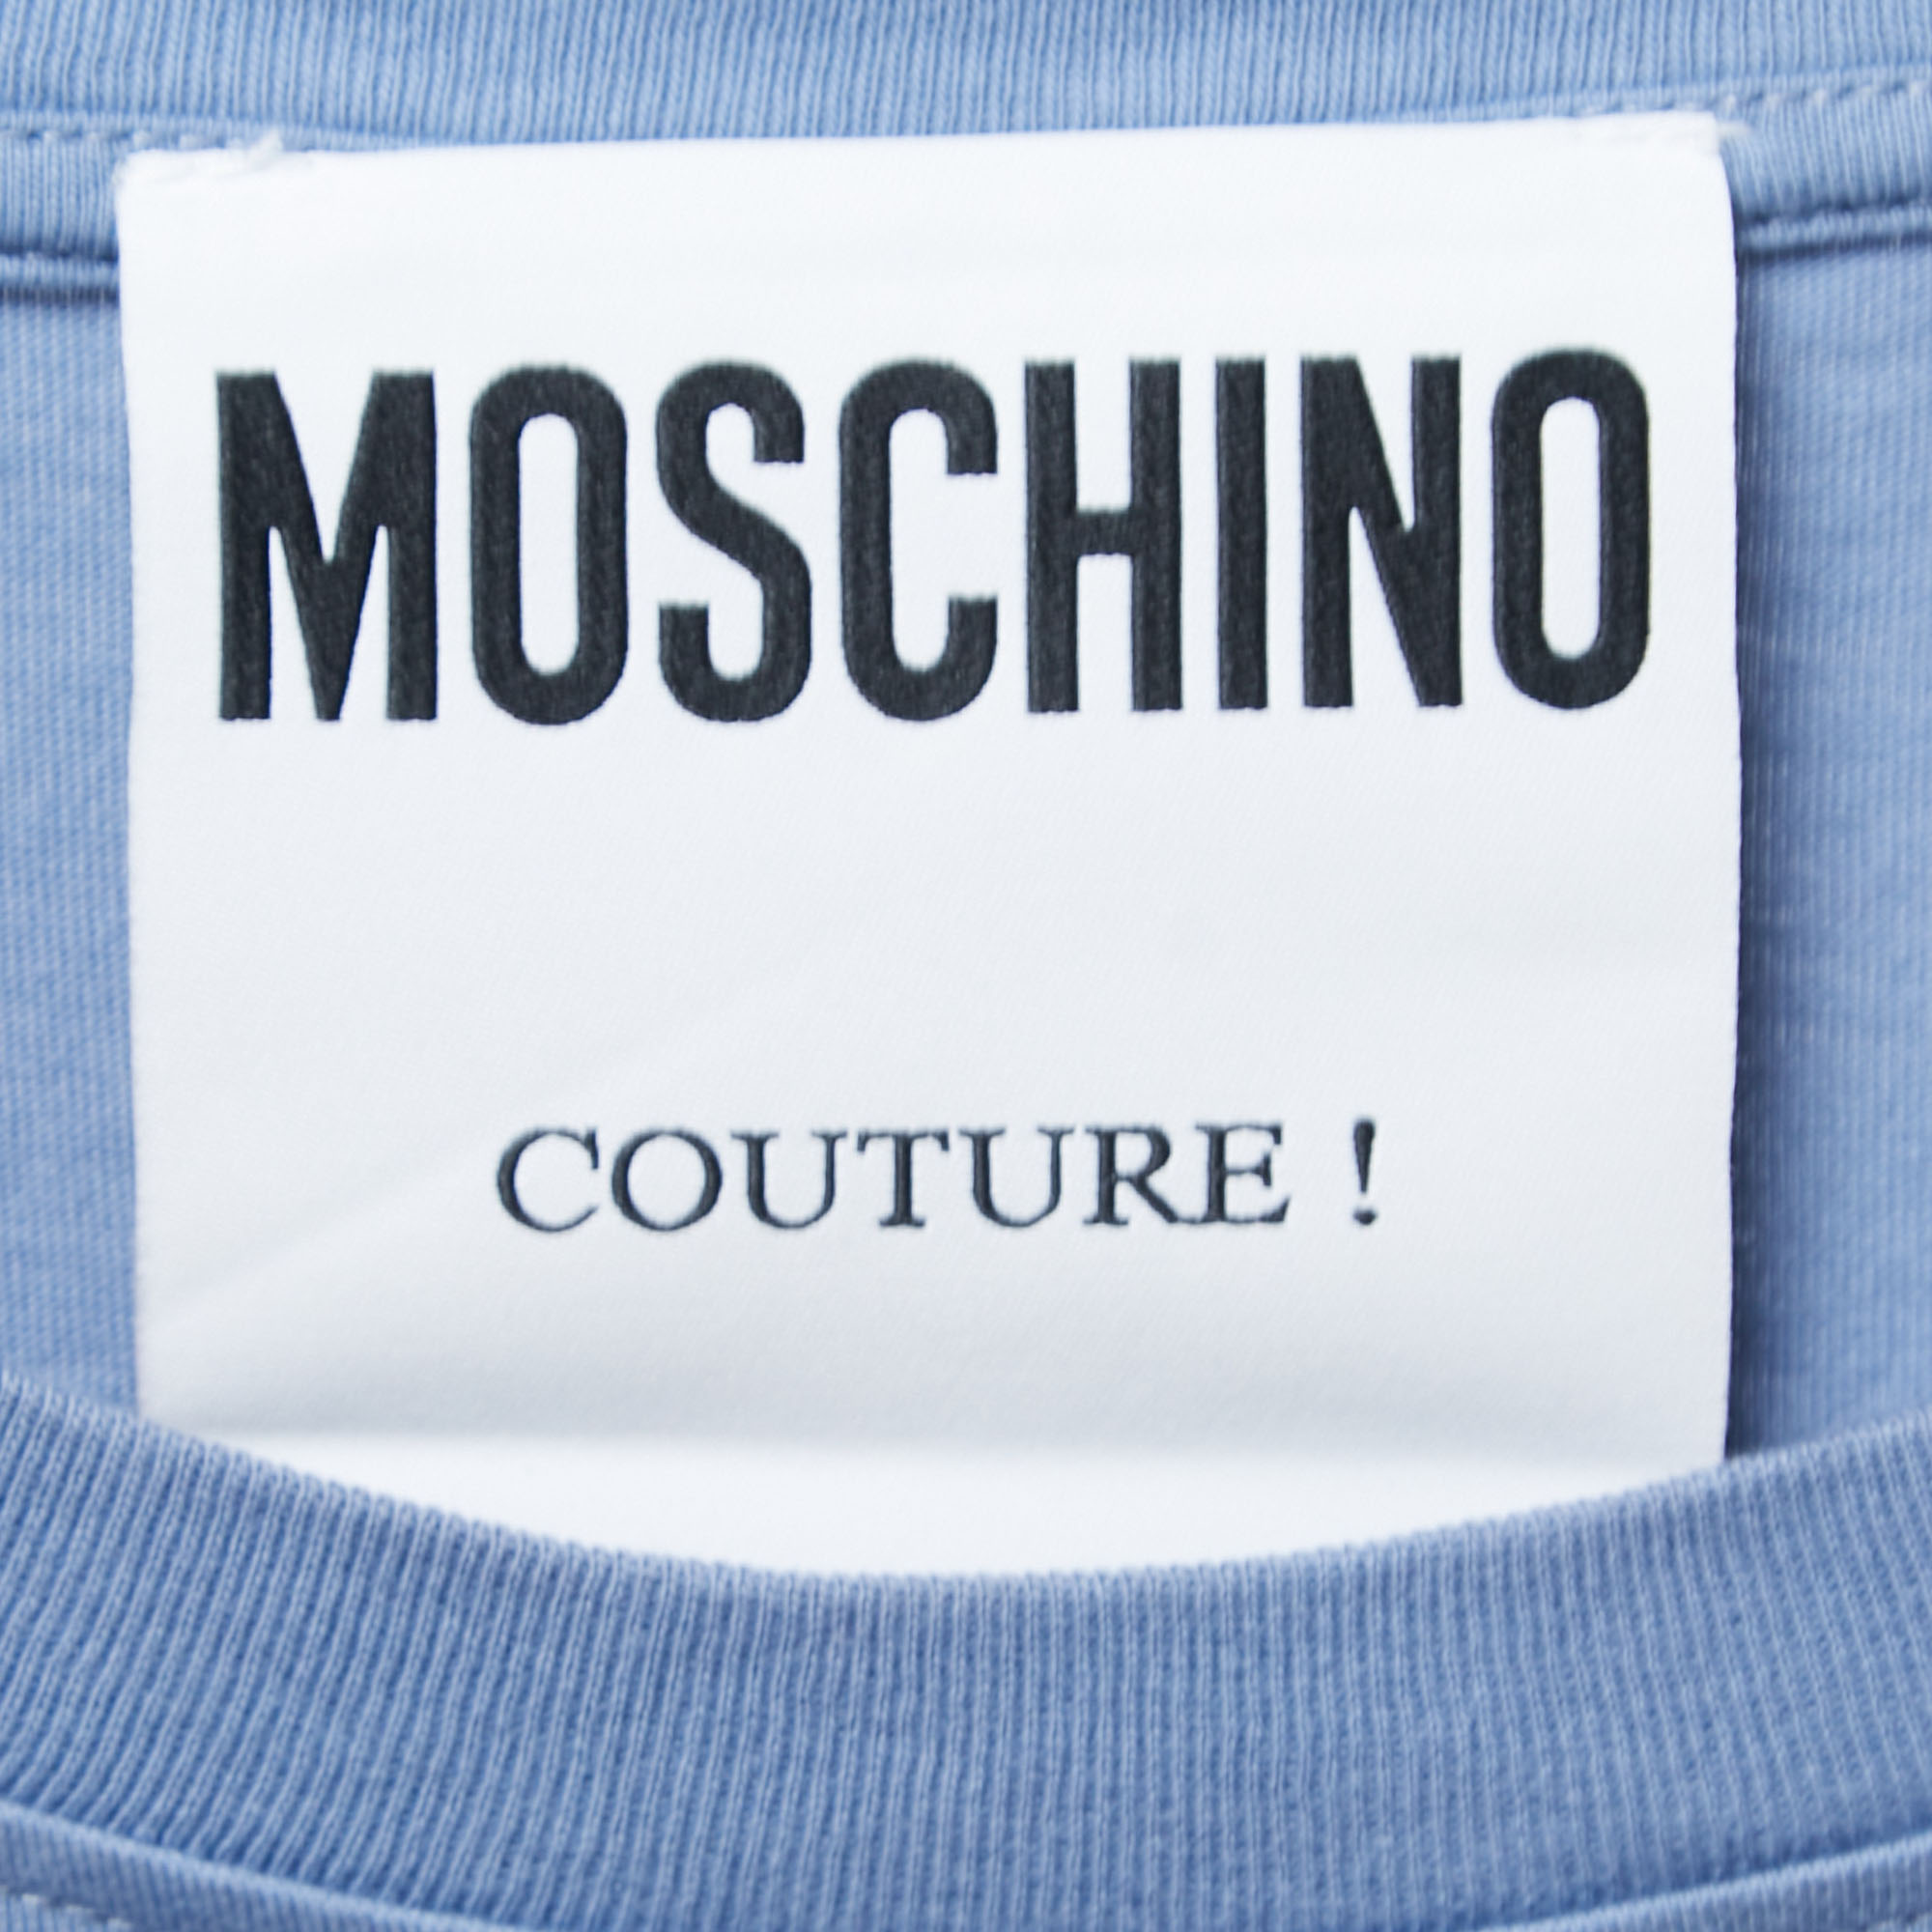 Moschino Blue Logo Print Cotton Crew Neck Short Sleeve T-Shirt M